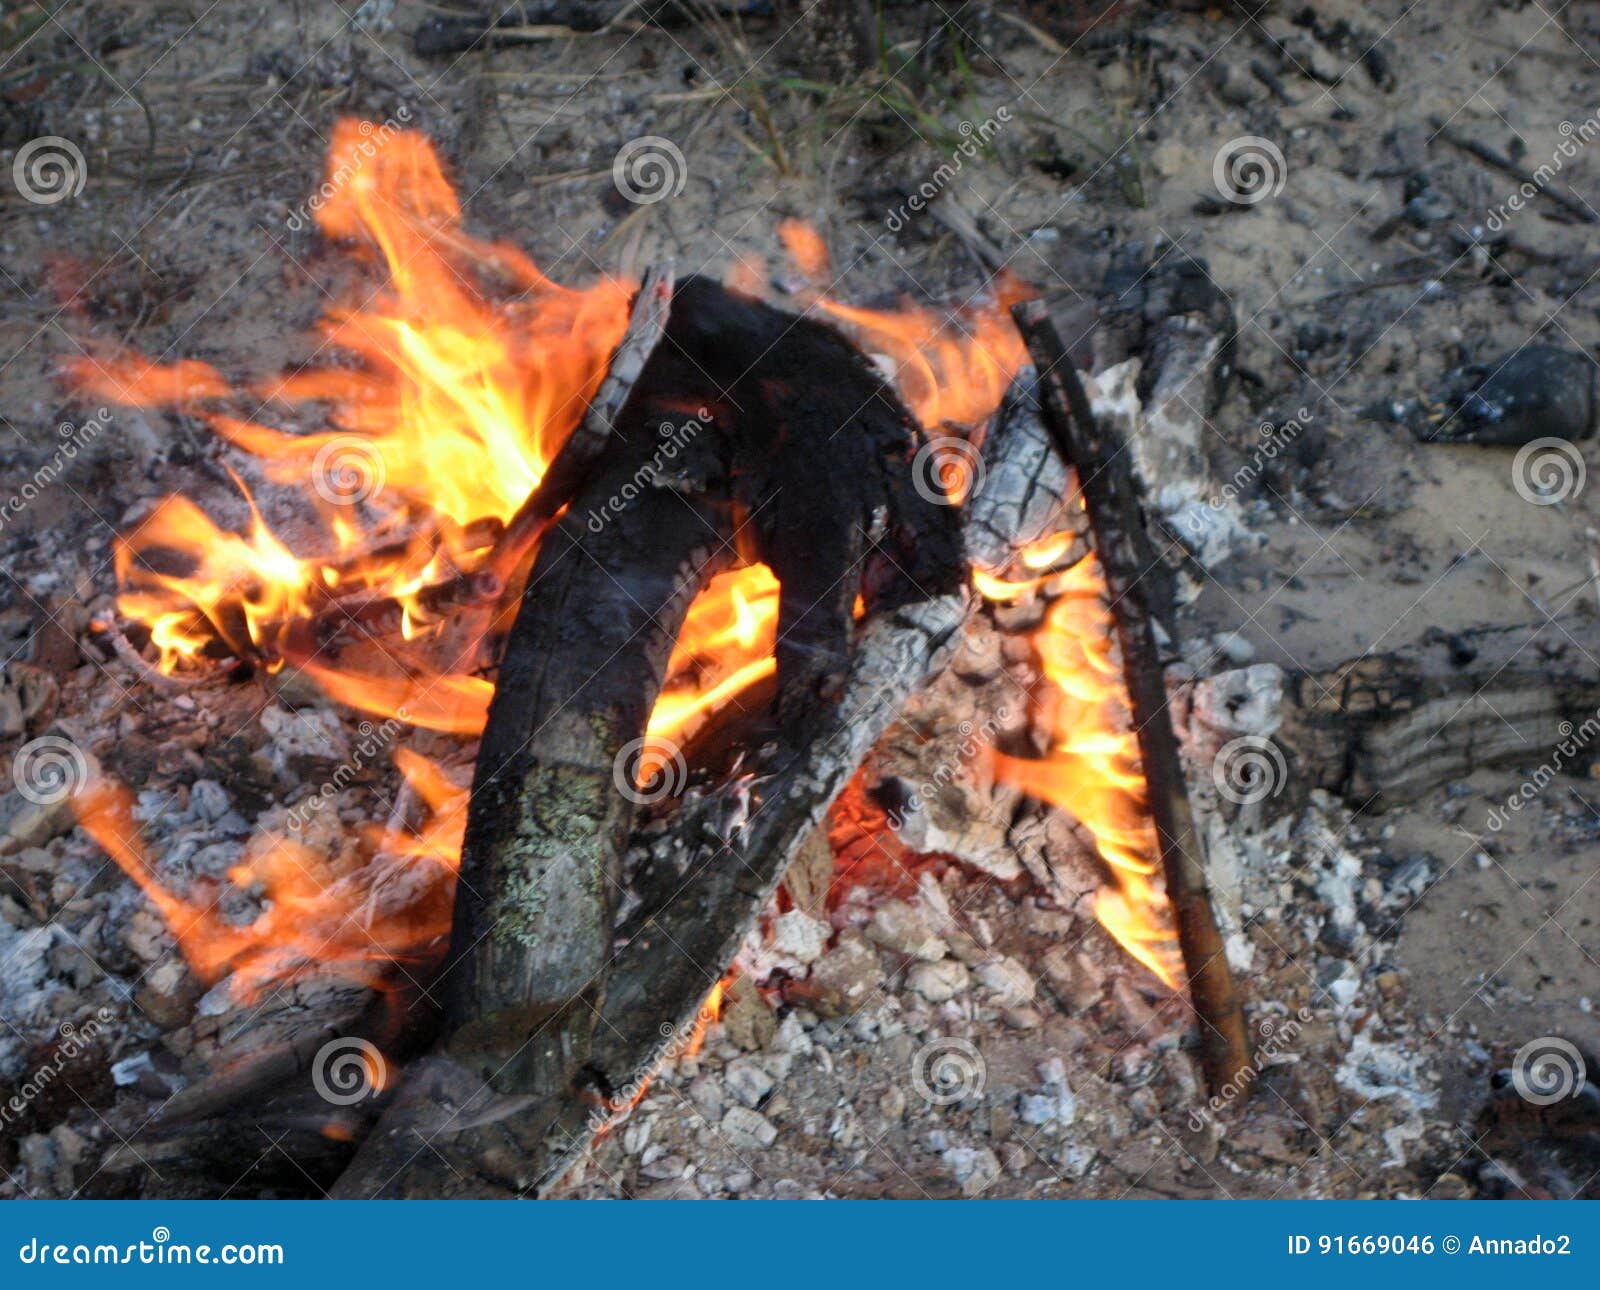 A fire of burning coals stock photo. Image of blaze, light - 91669046